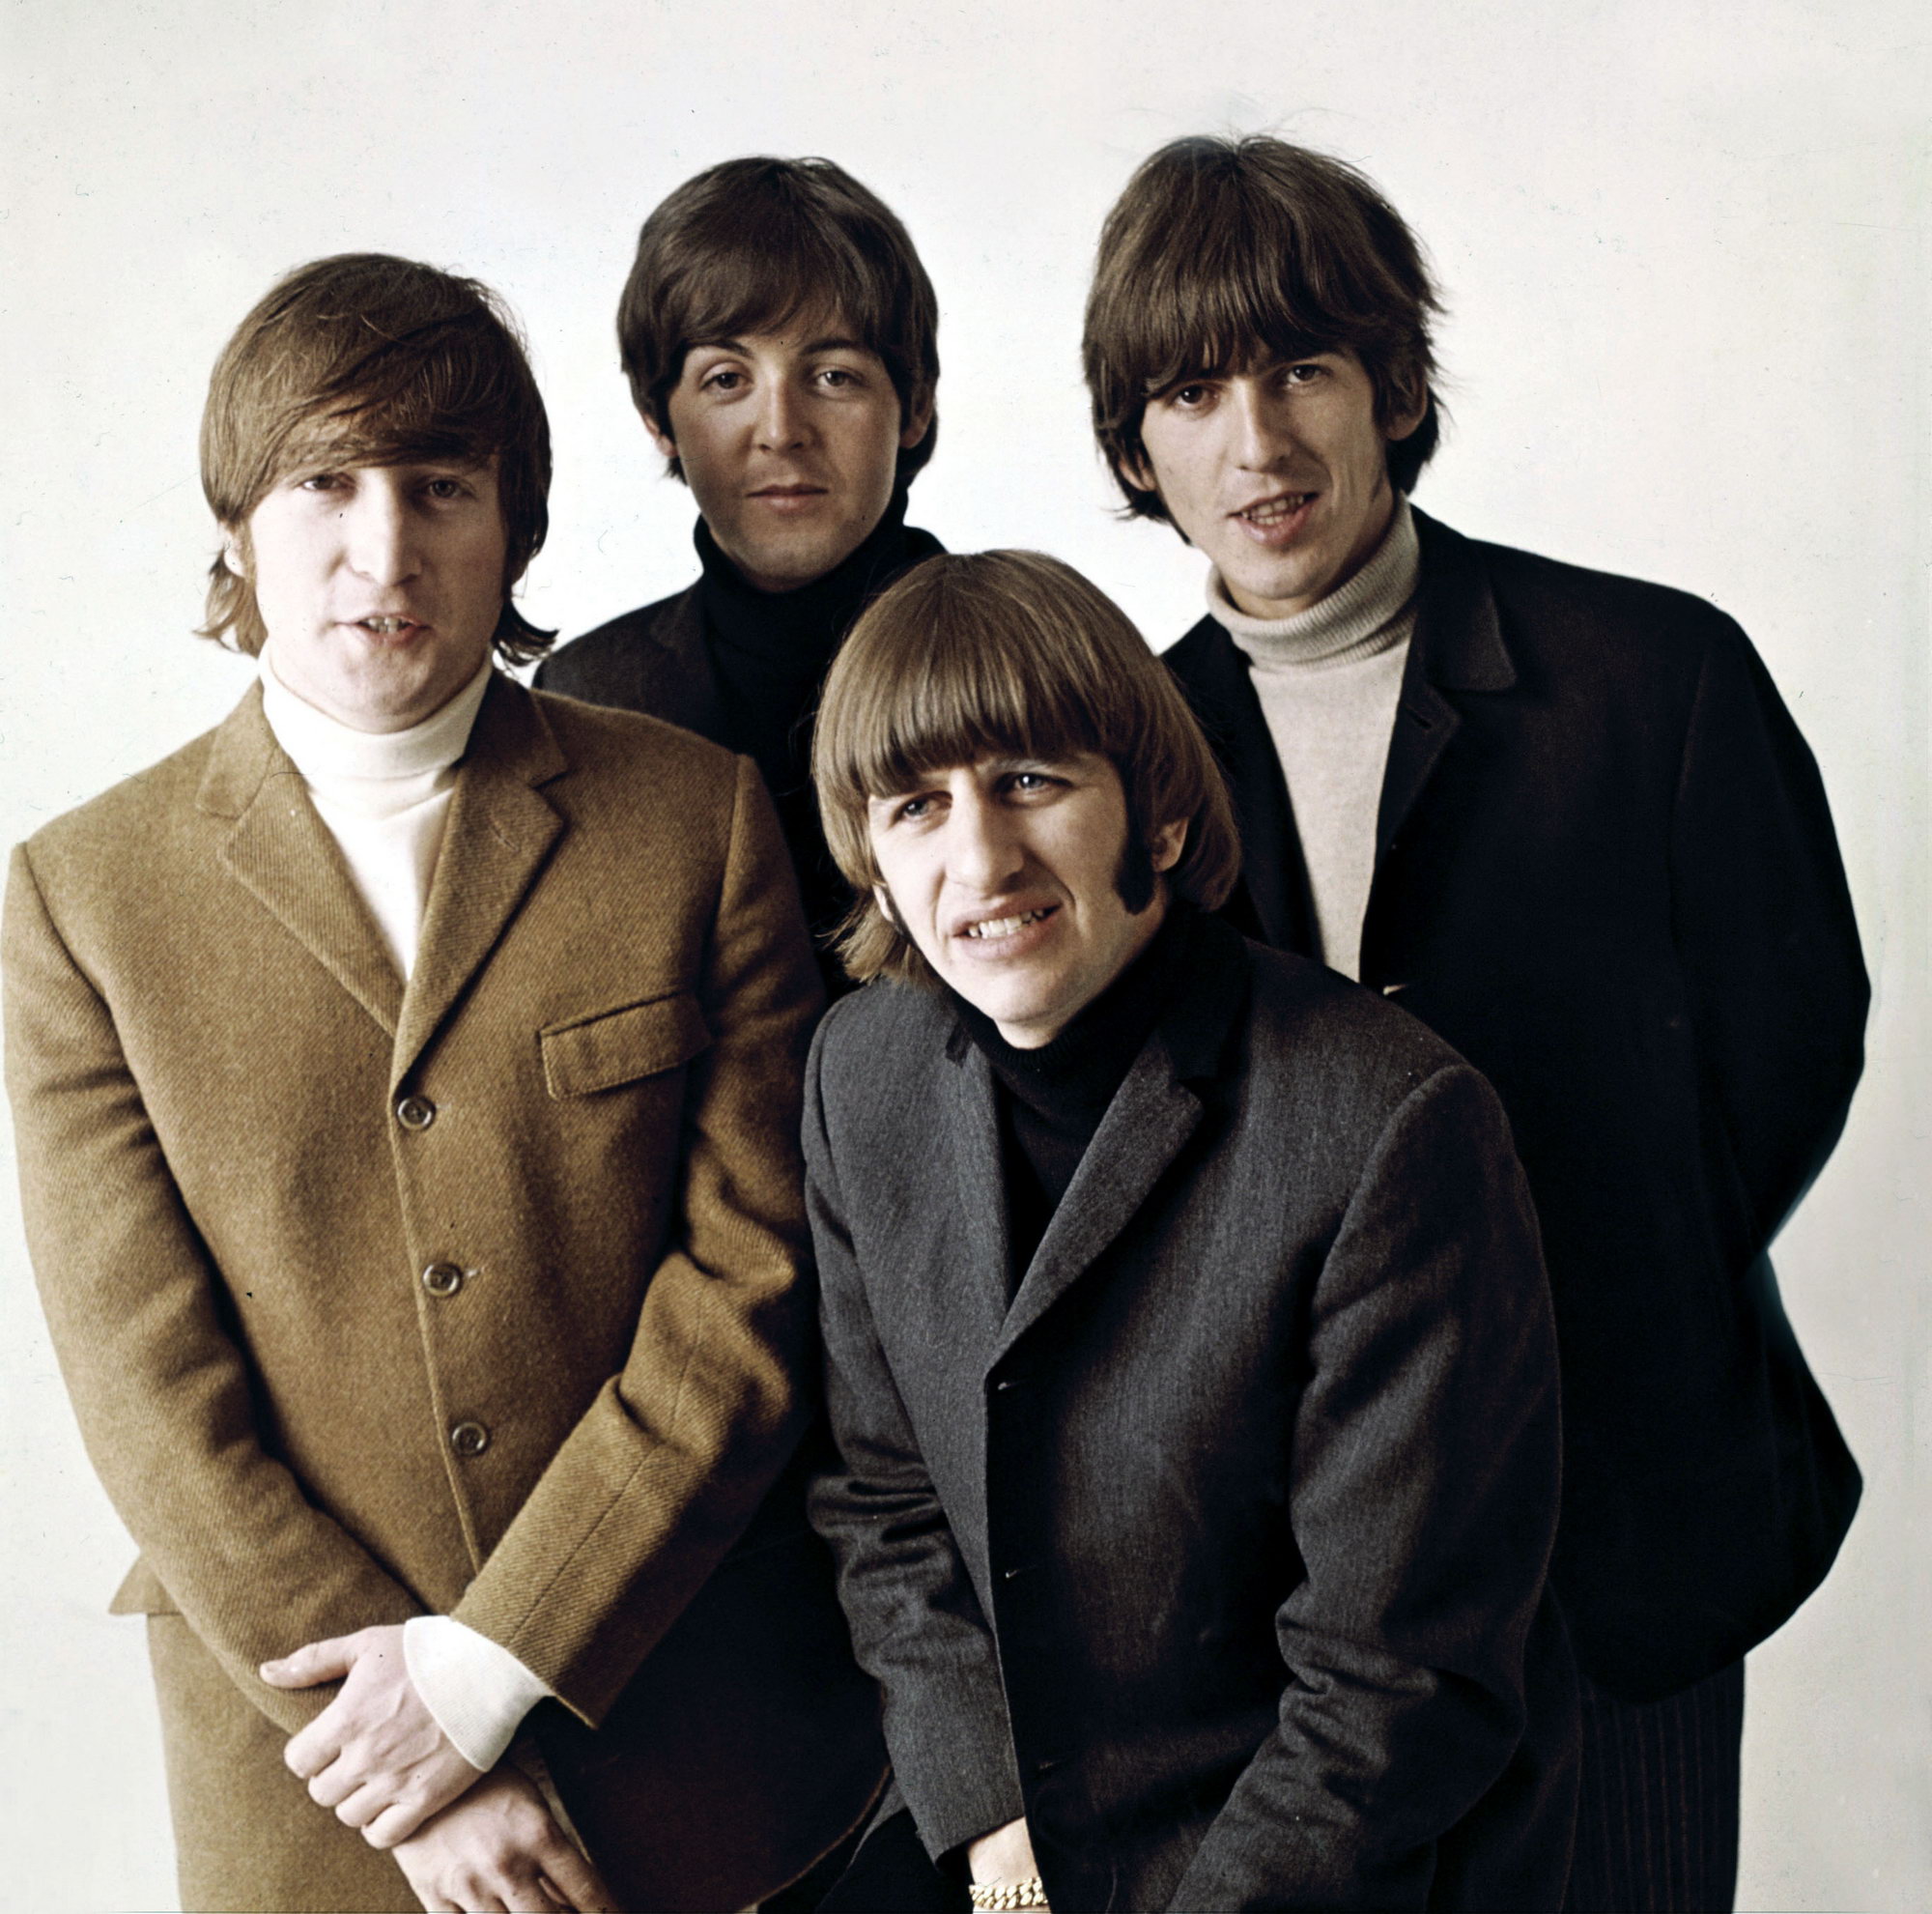 People 2000x1981 The Beatles John Lennon Paul McCartney George Harrison Ringo Starr band rock bands music musician turtlenecks studio men